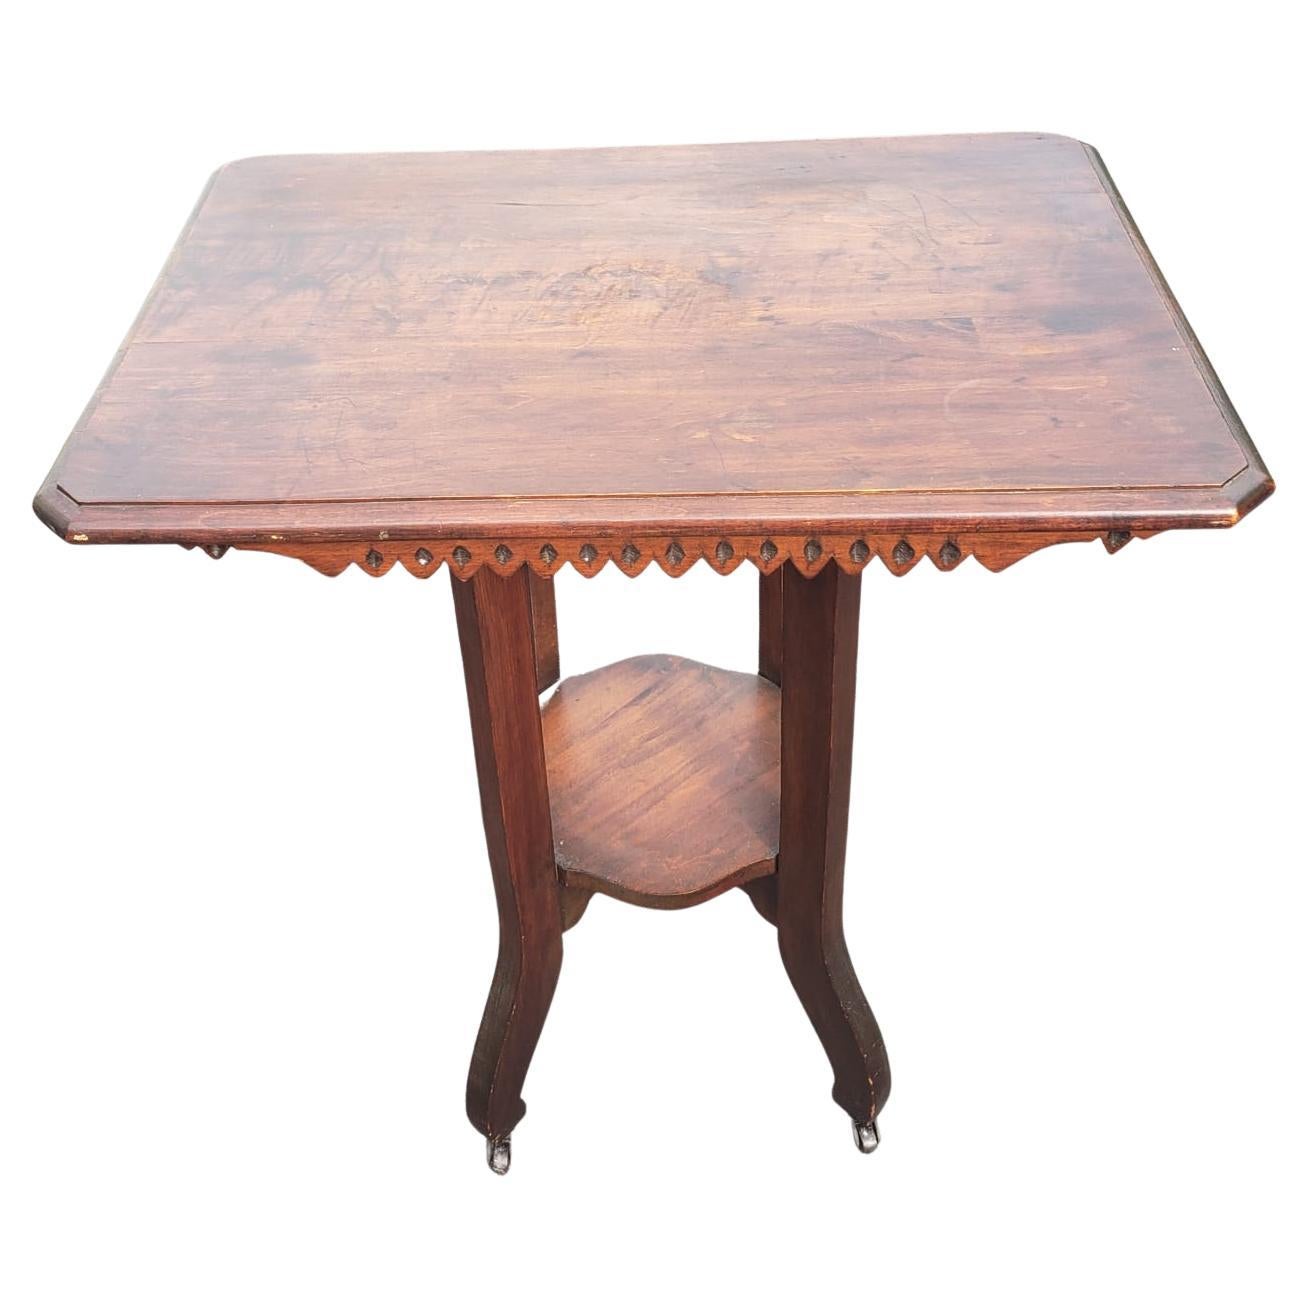 Antique walnut tier tea table side table on wheels, Circa 1910s.
Good vintage condition.
Measures 28.25